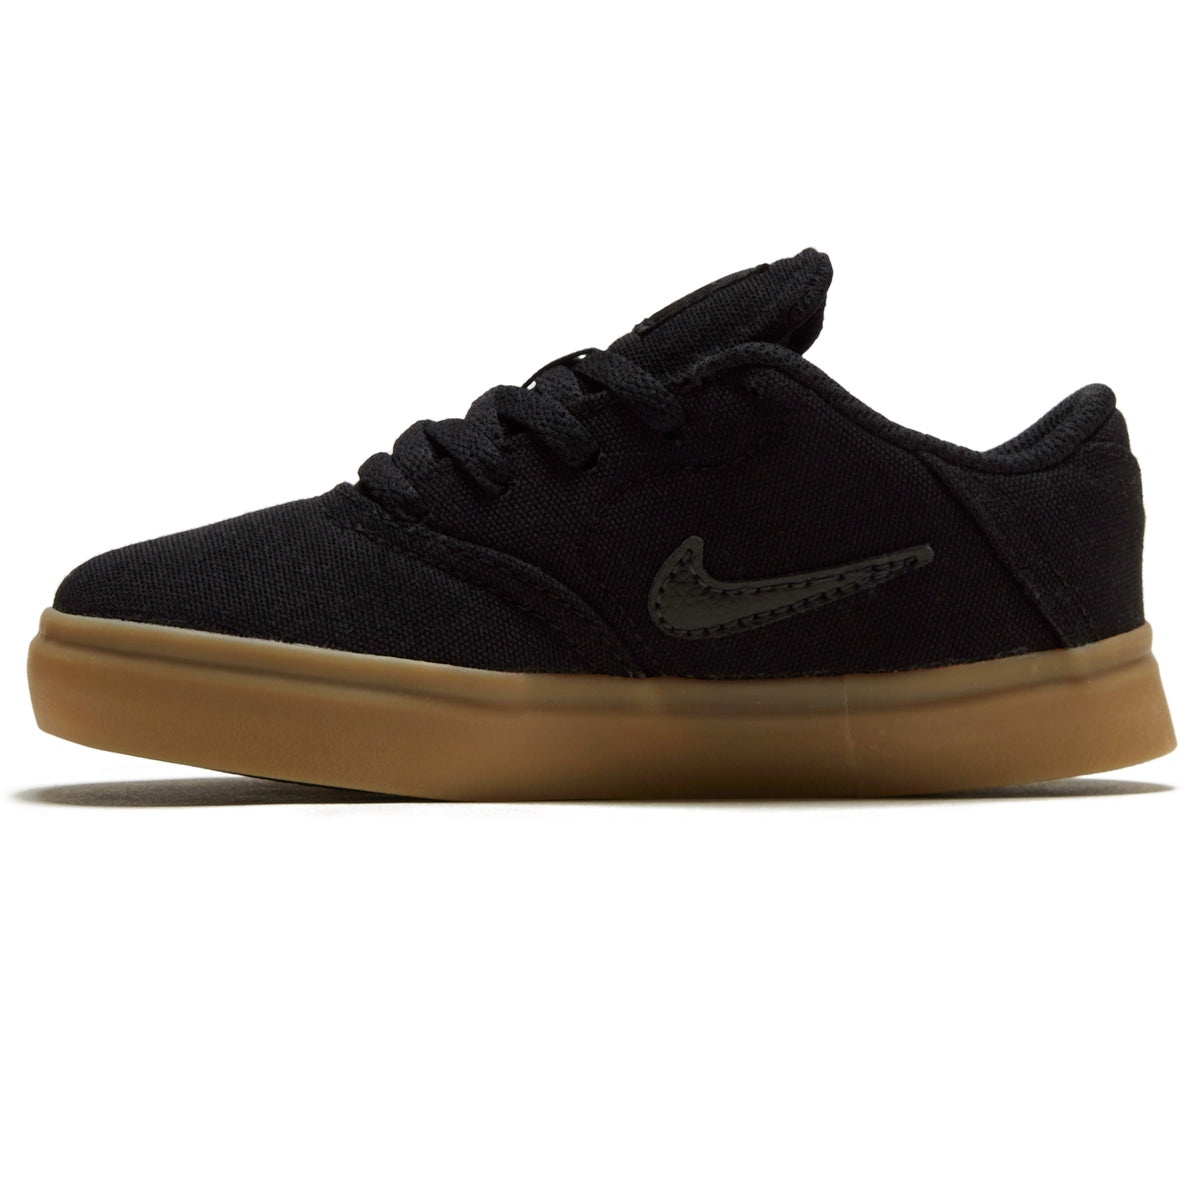 Nike SB Youth Check Canvas Shoes - Black/Black/Gum Light Brown image 2